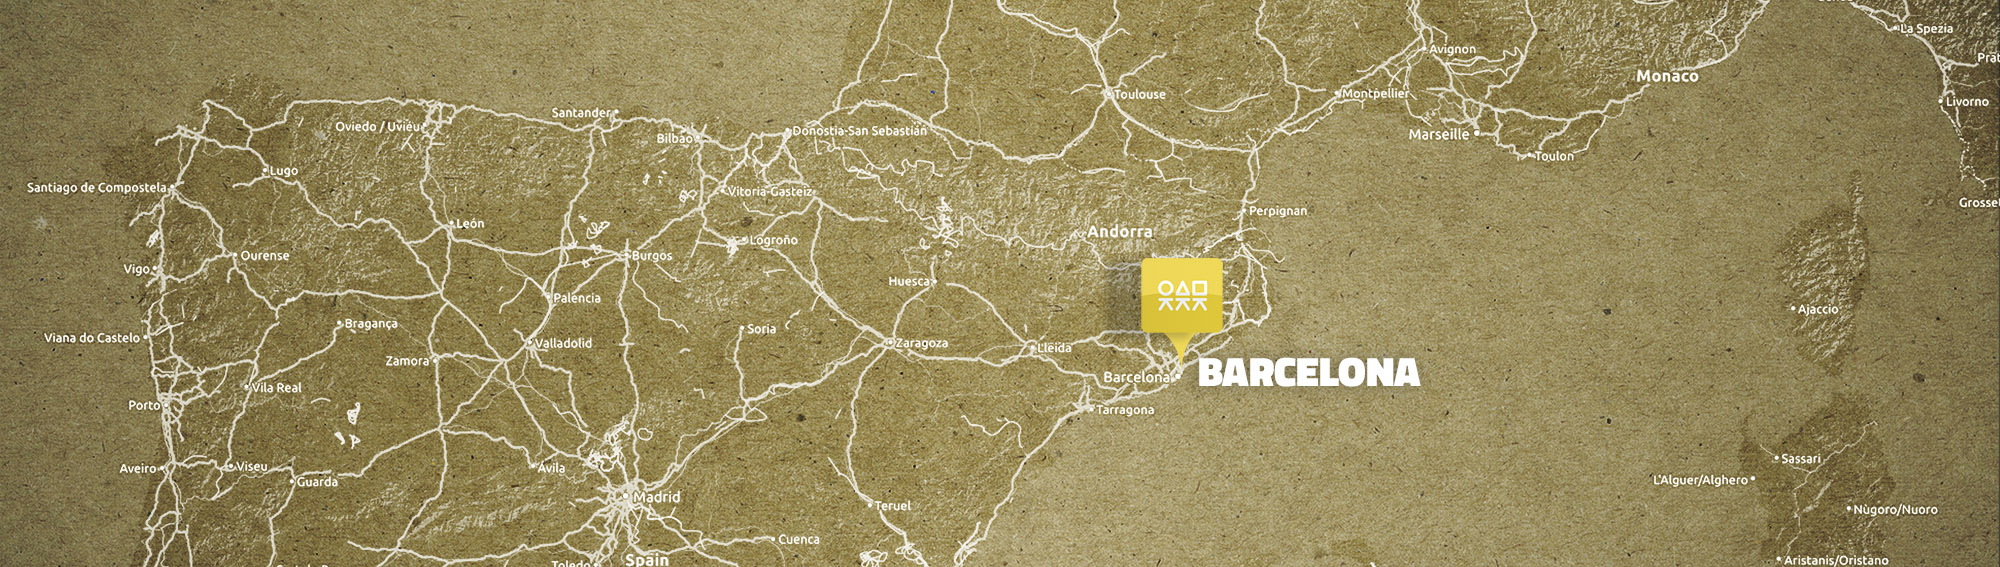 carte_barcelona